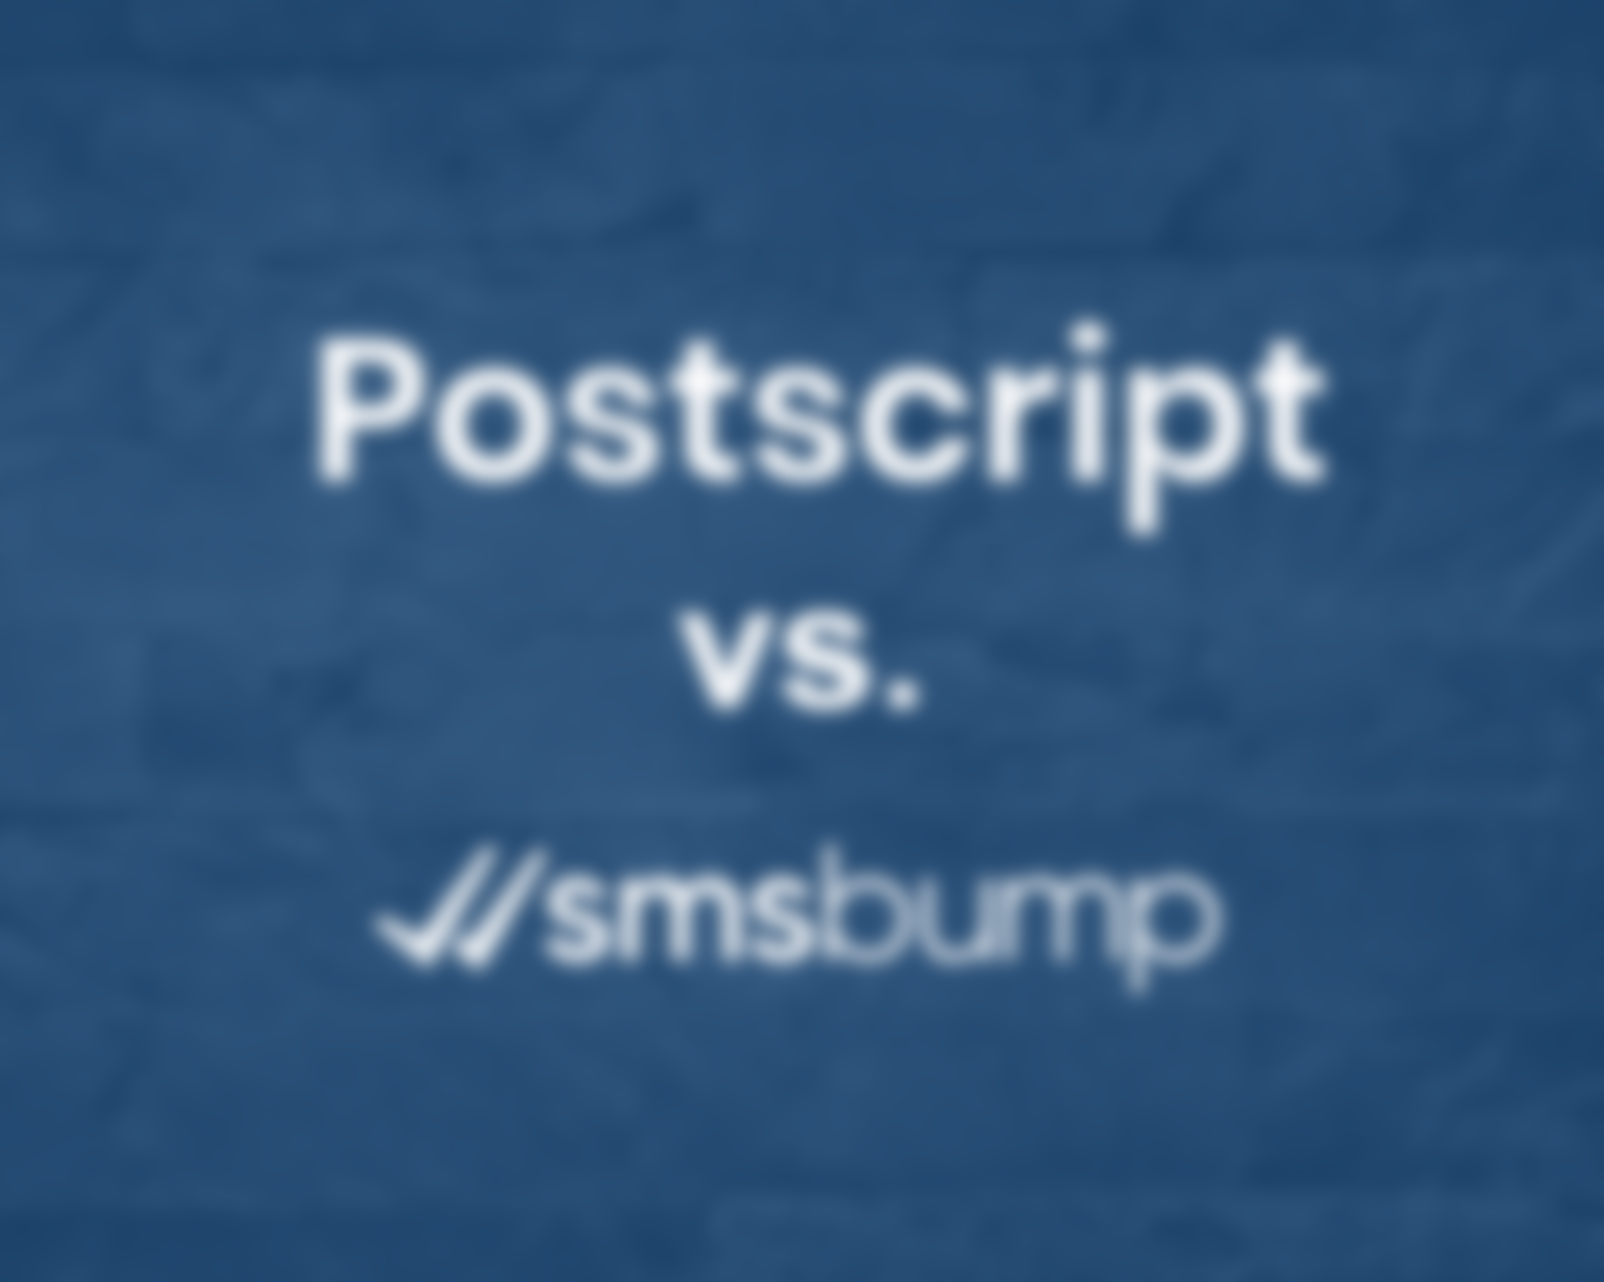 Postscript vs. SMSBump